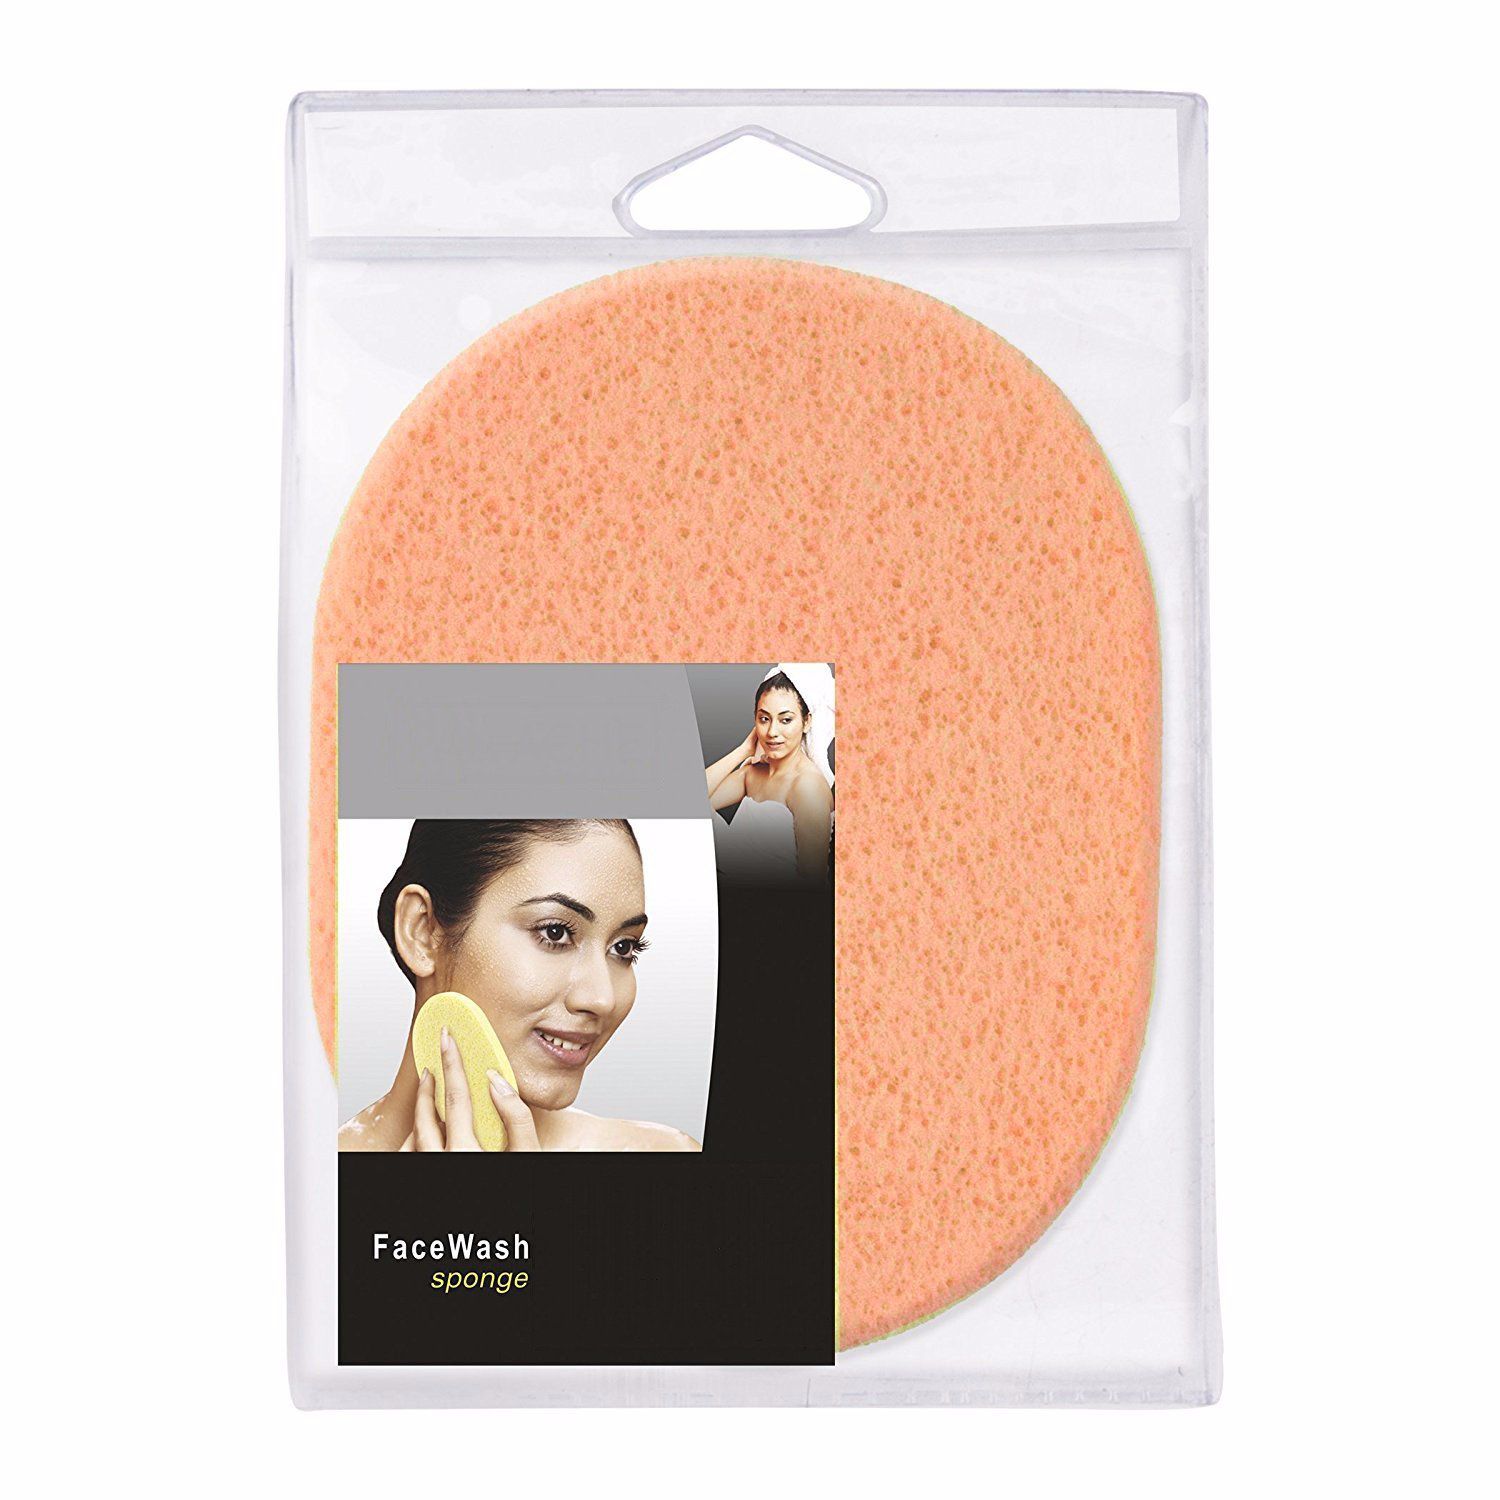     			FOK Face Cleansing  Makeup Washing Pad Face 50 g Deep Exfoliating Facial Sponge